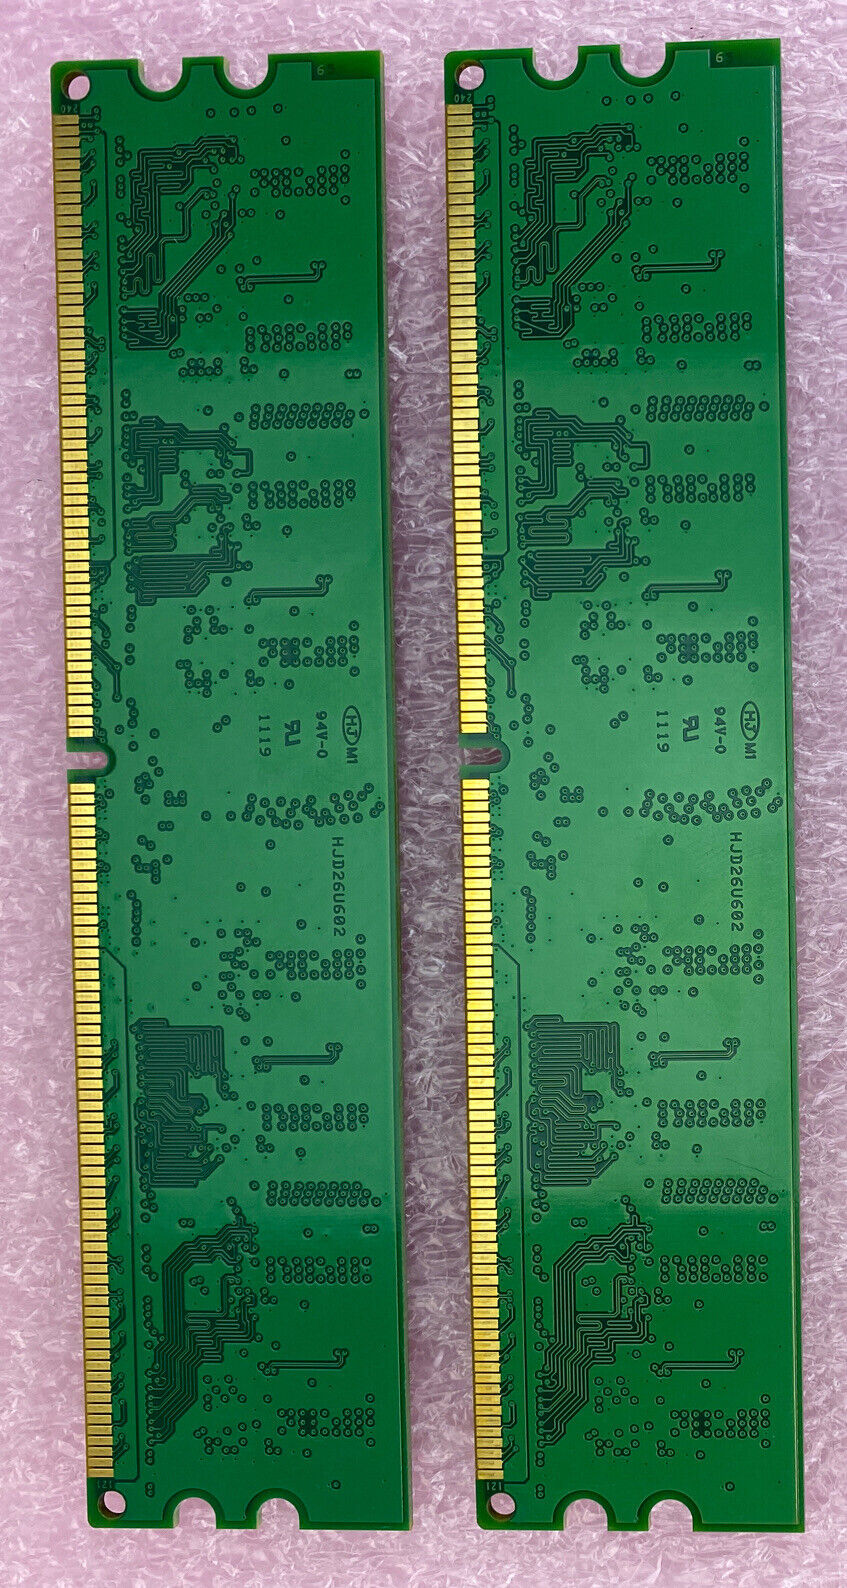 2x 512MB Crucial CT6464AA64.M4FH 240-Pin DIMM 64Mx64 DDR2 PC2-5300 Unbuffered